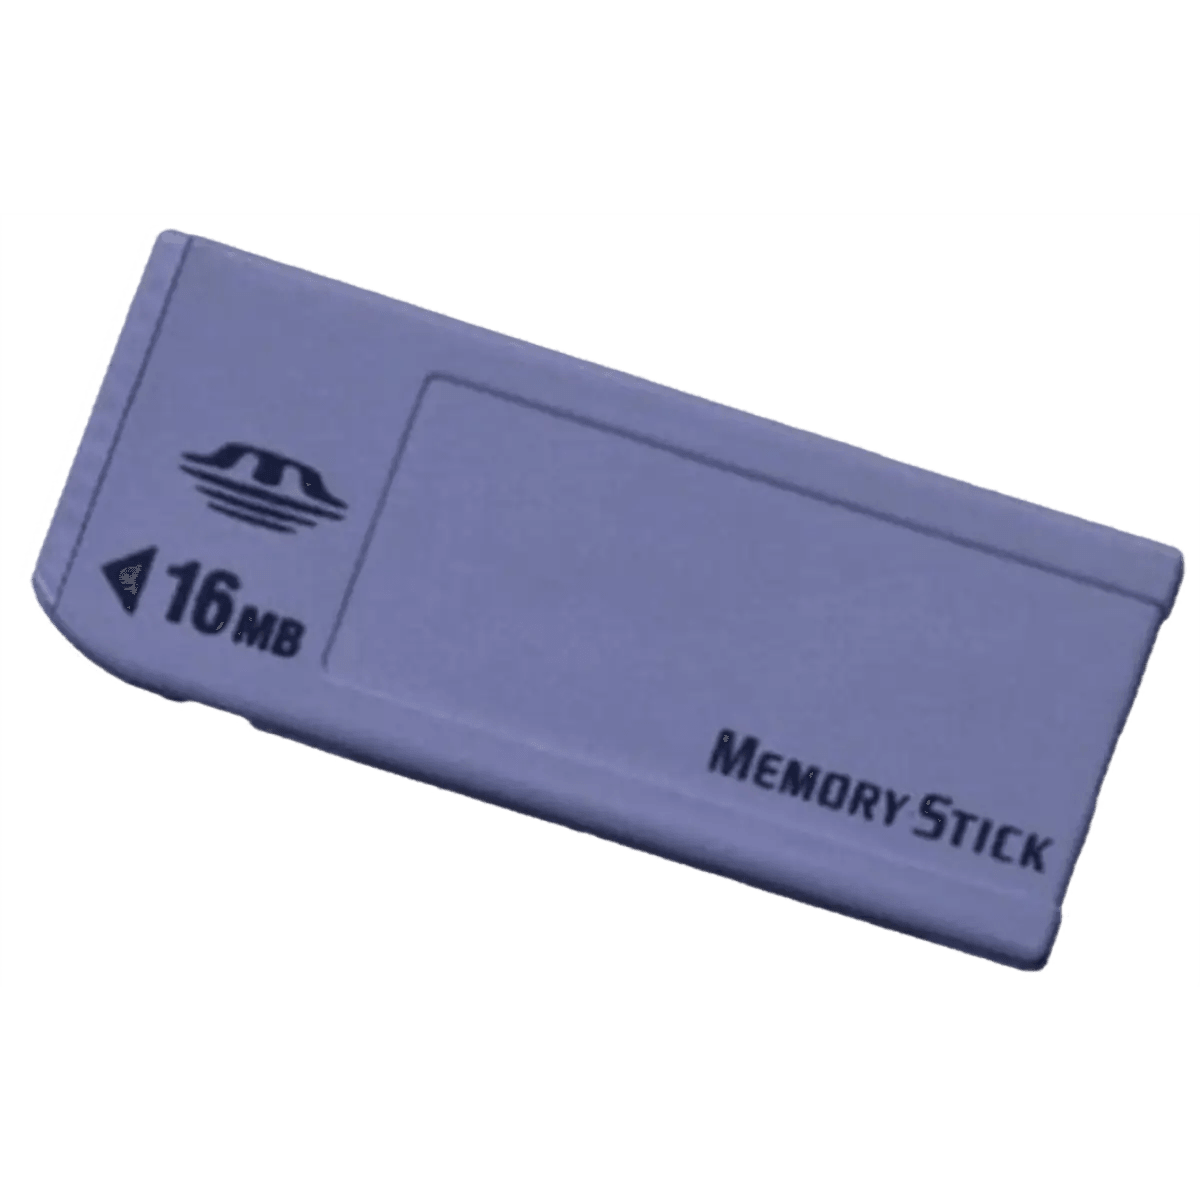 Carte mémoire Memory Stick 16Mb MS